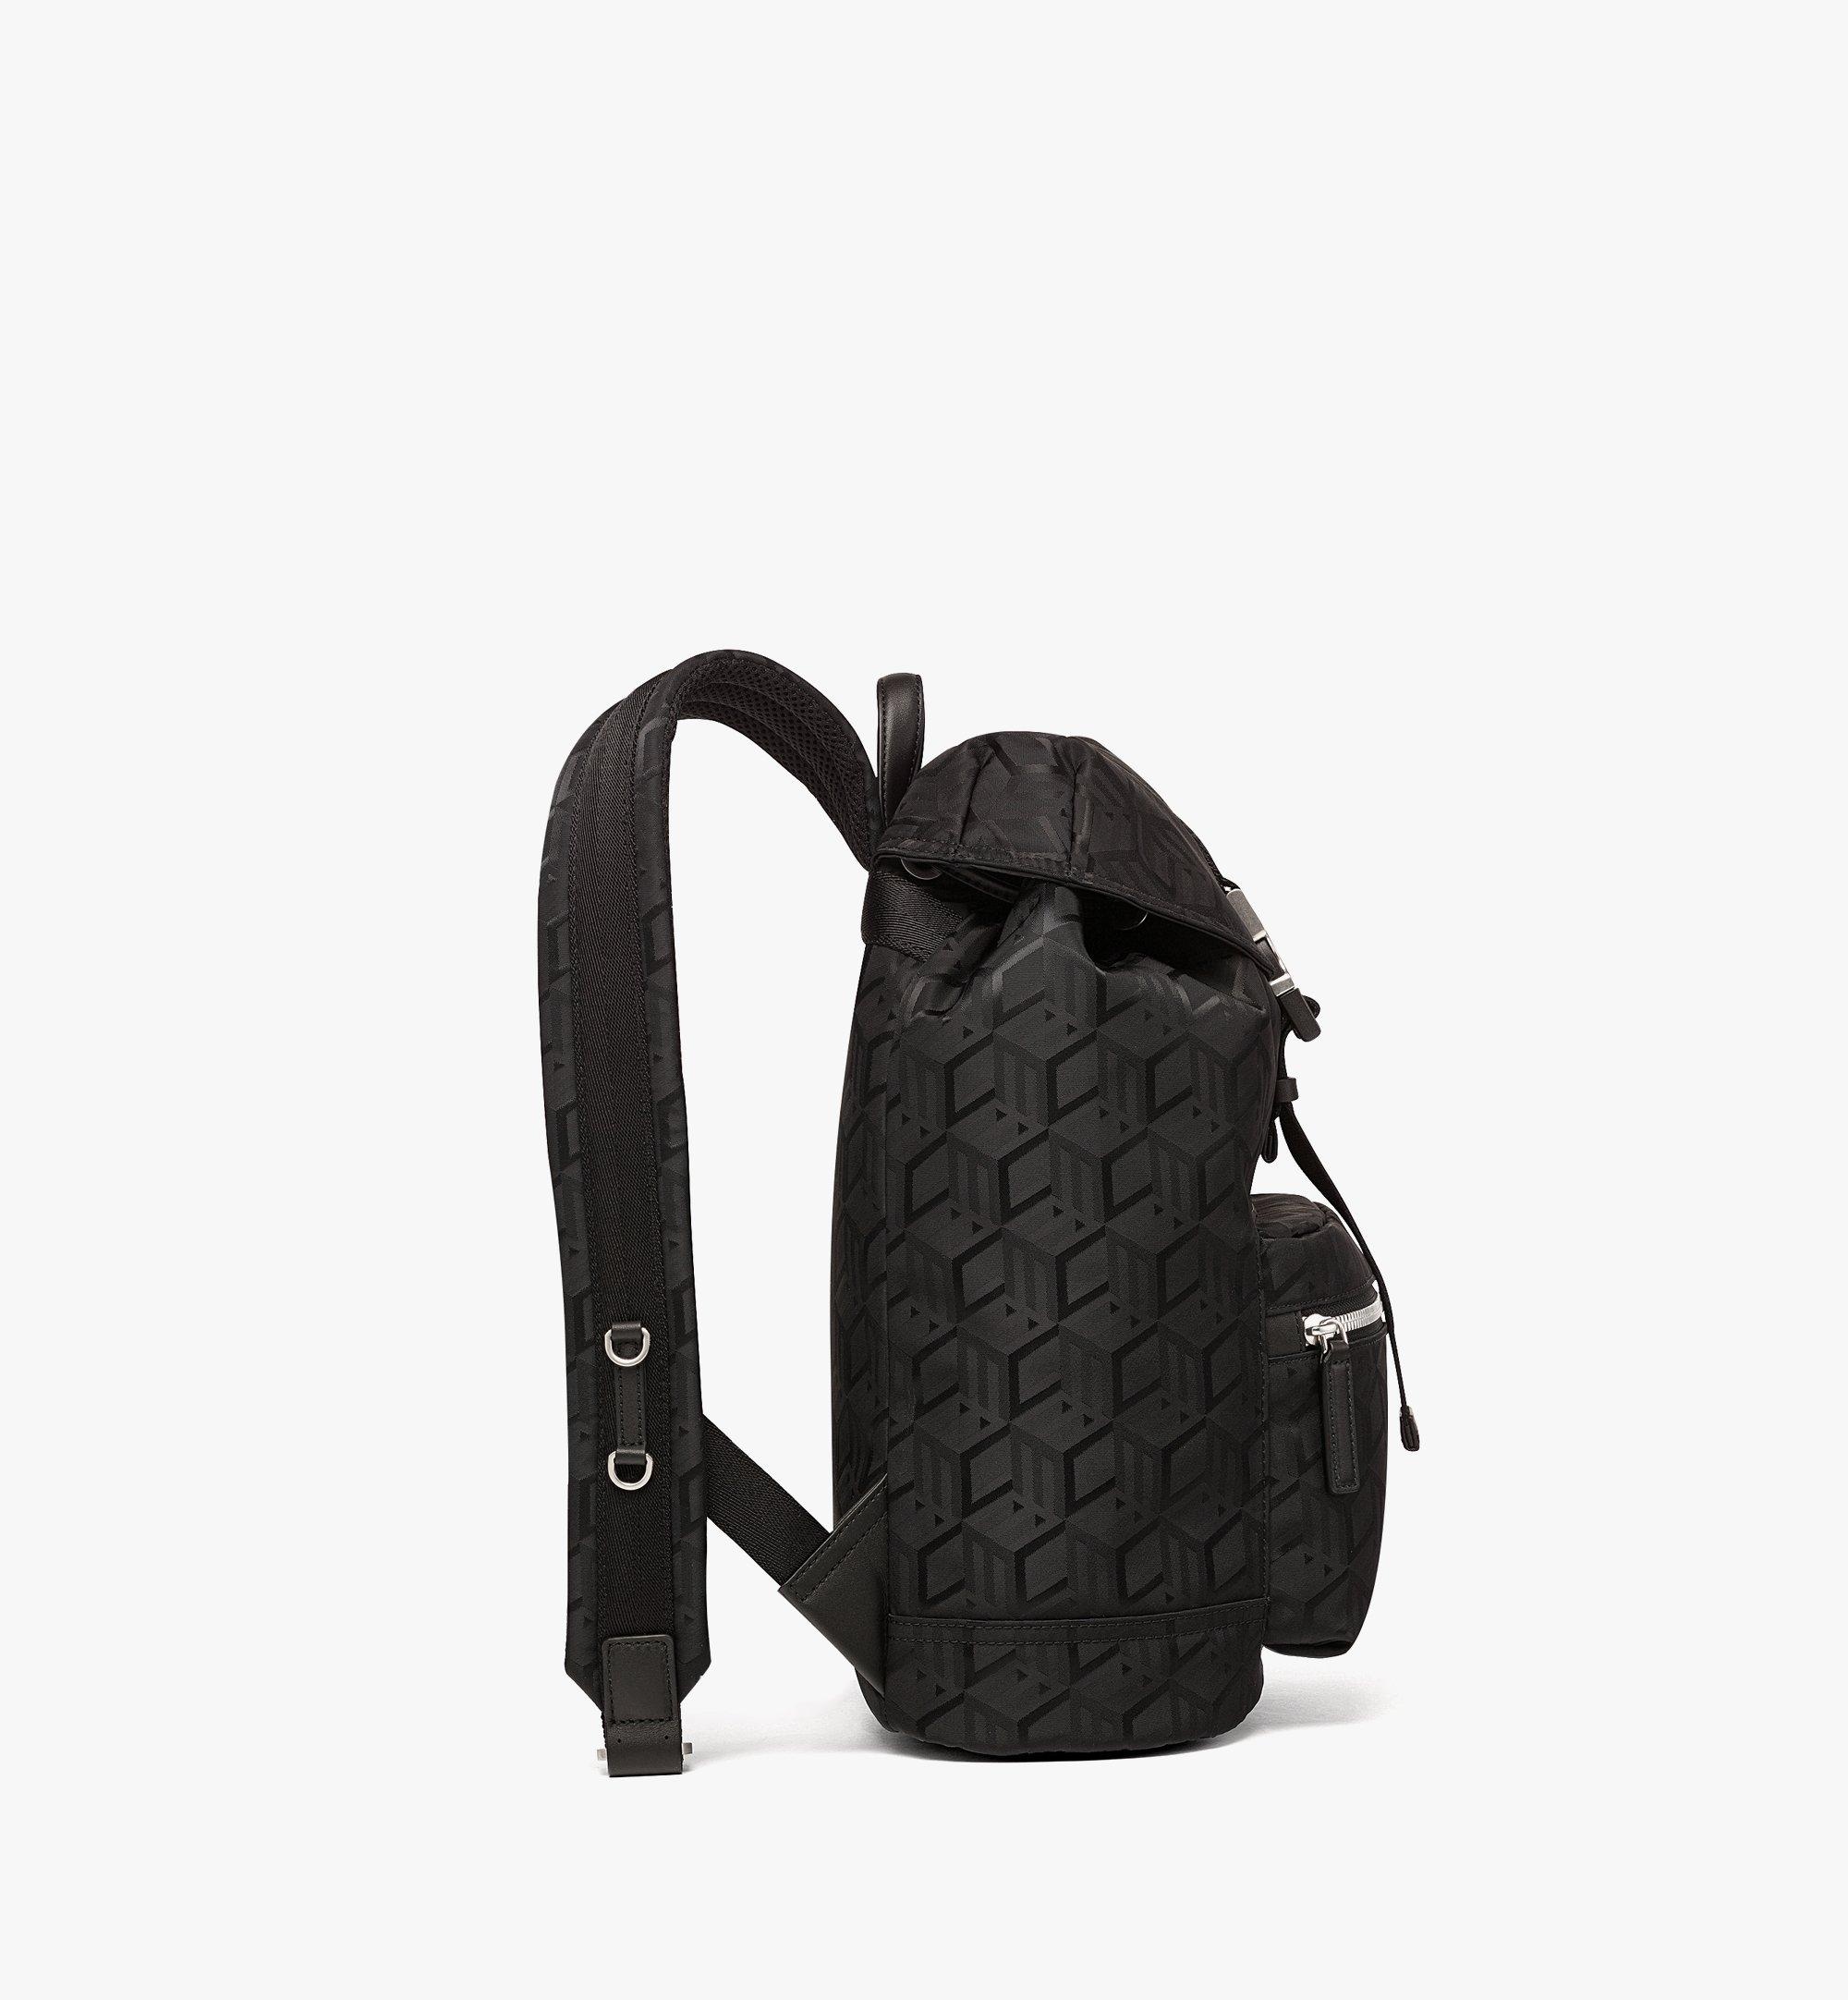 MCM Brandenburg Backpack in Cubic Jacquard Nylon